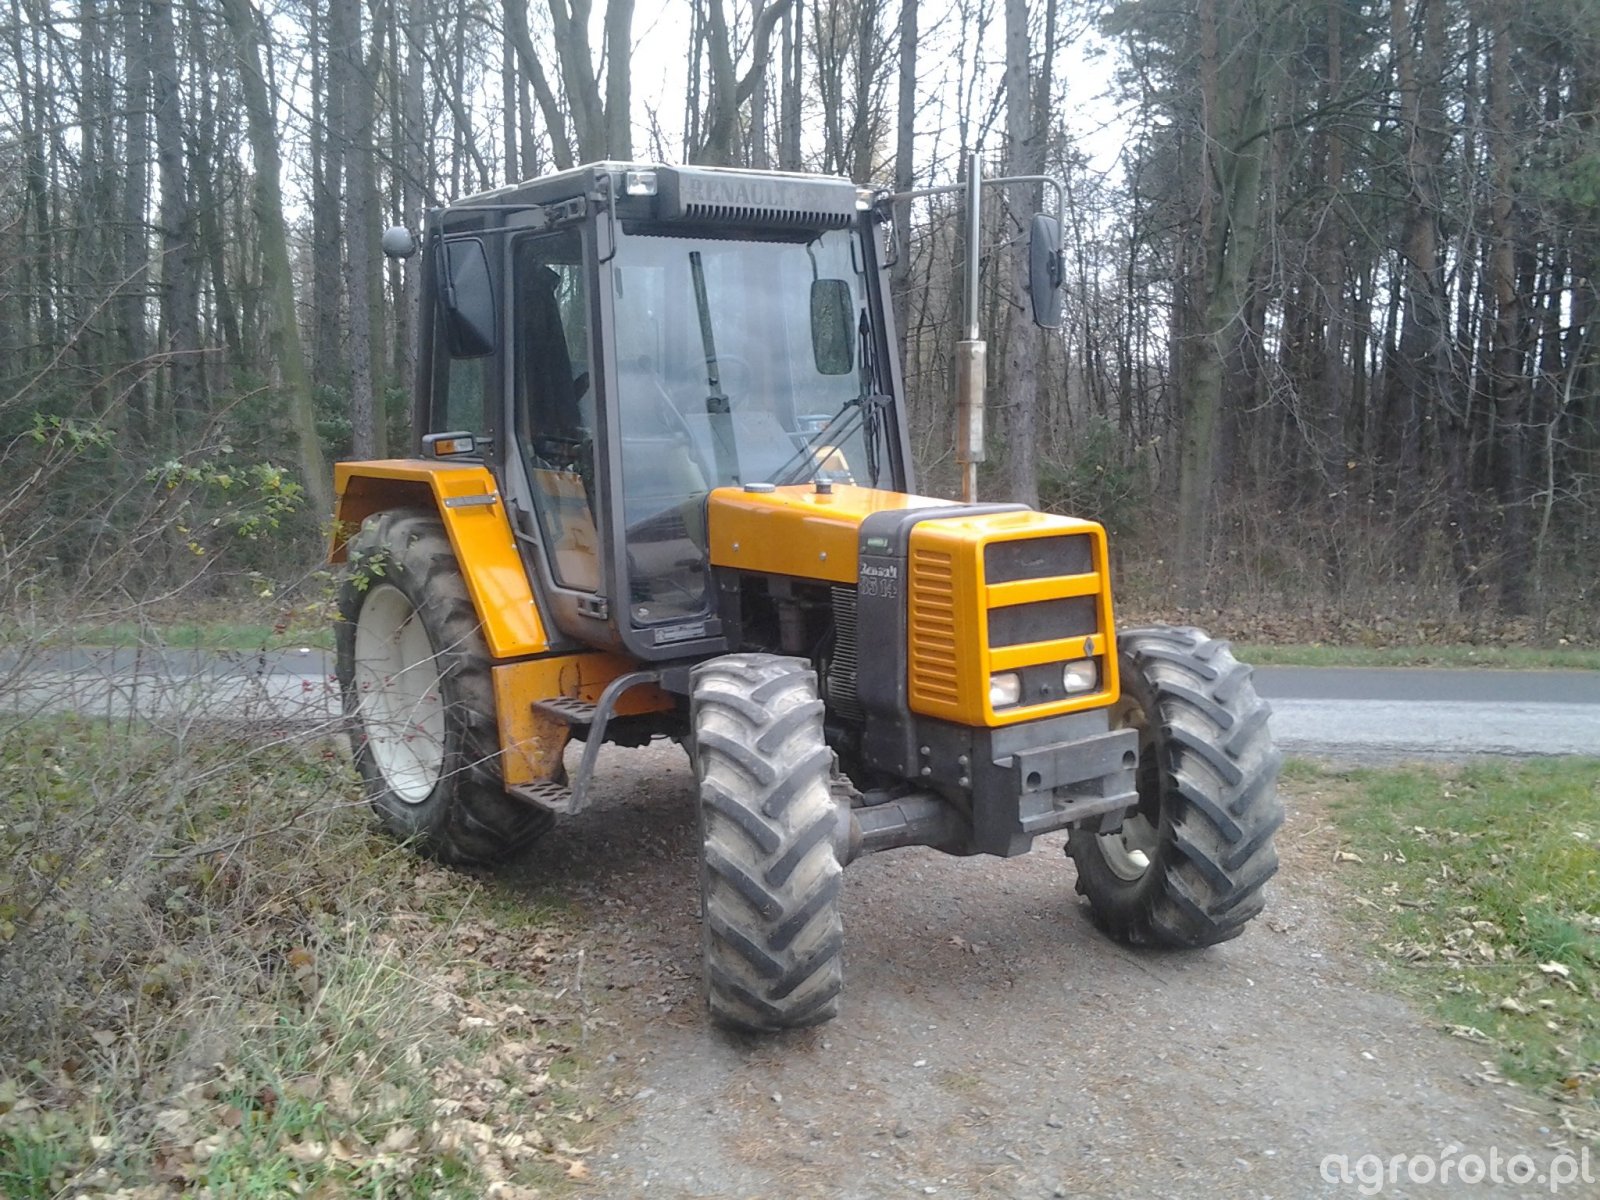 Obraz Traktor Renault 85-14 Ts Id:463785 - Galeria Rolnicza Agrofoto